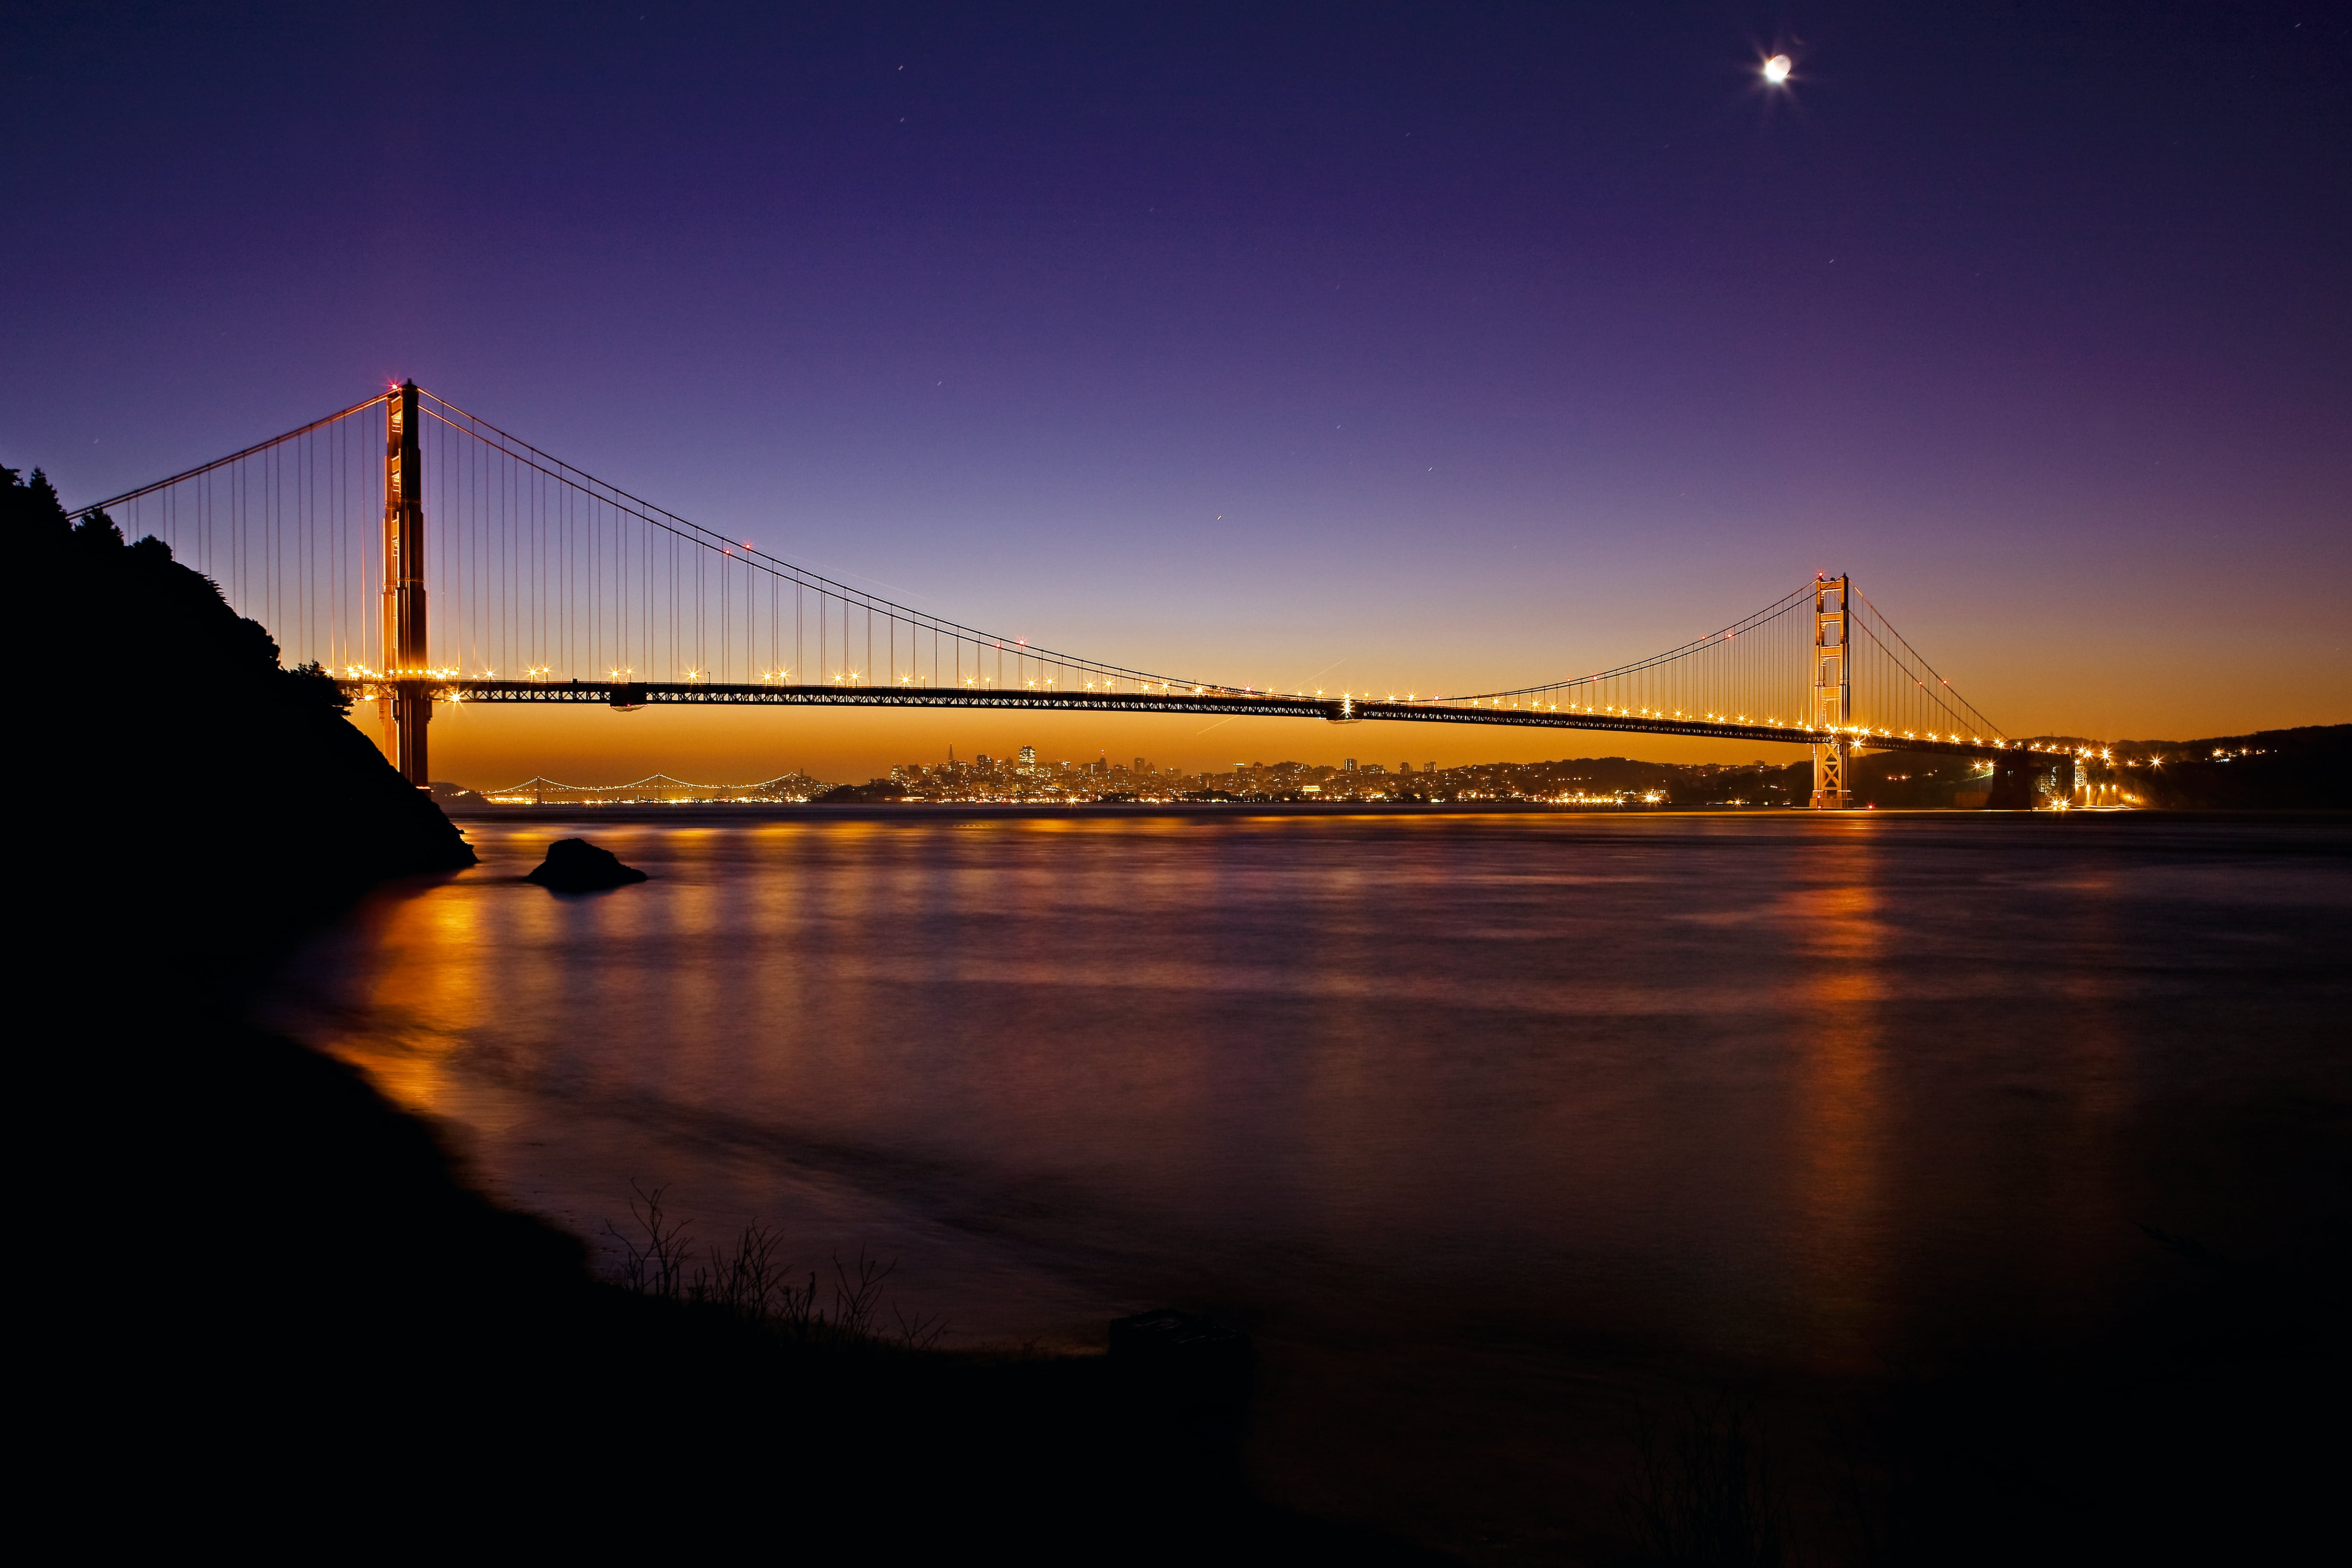 lighted bridge at nighttime